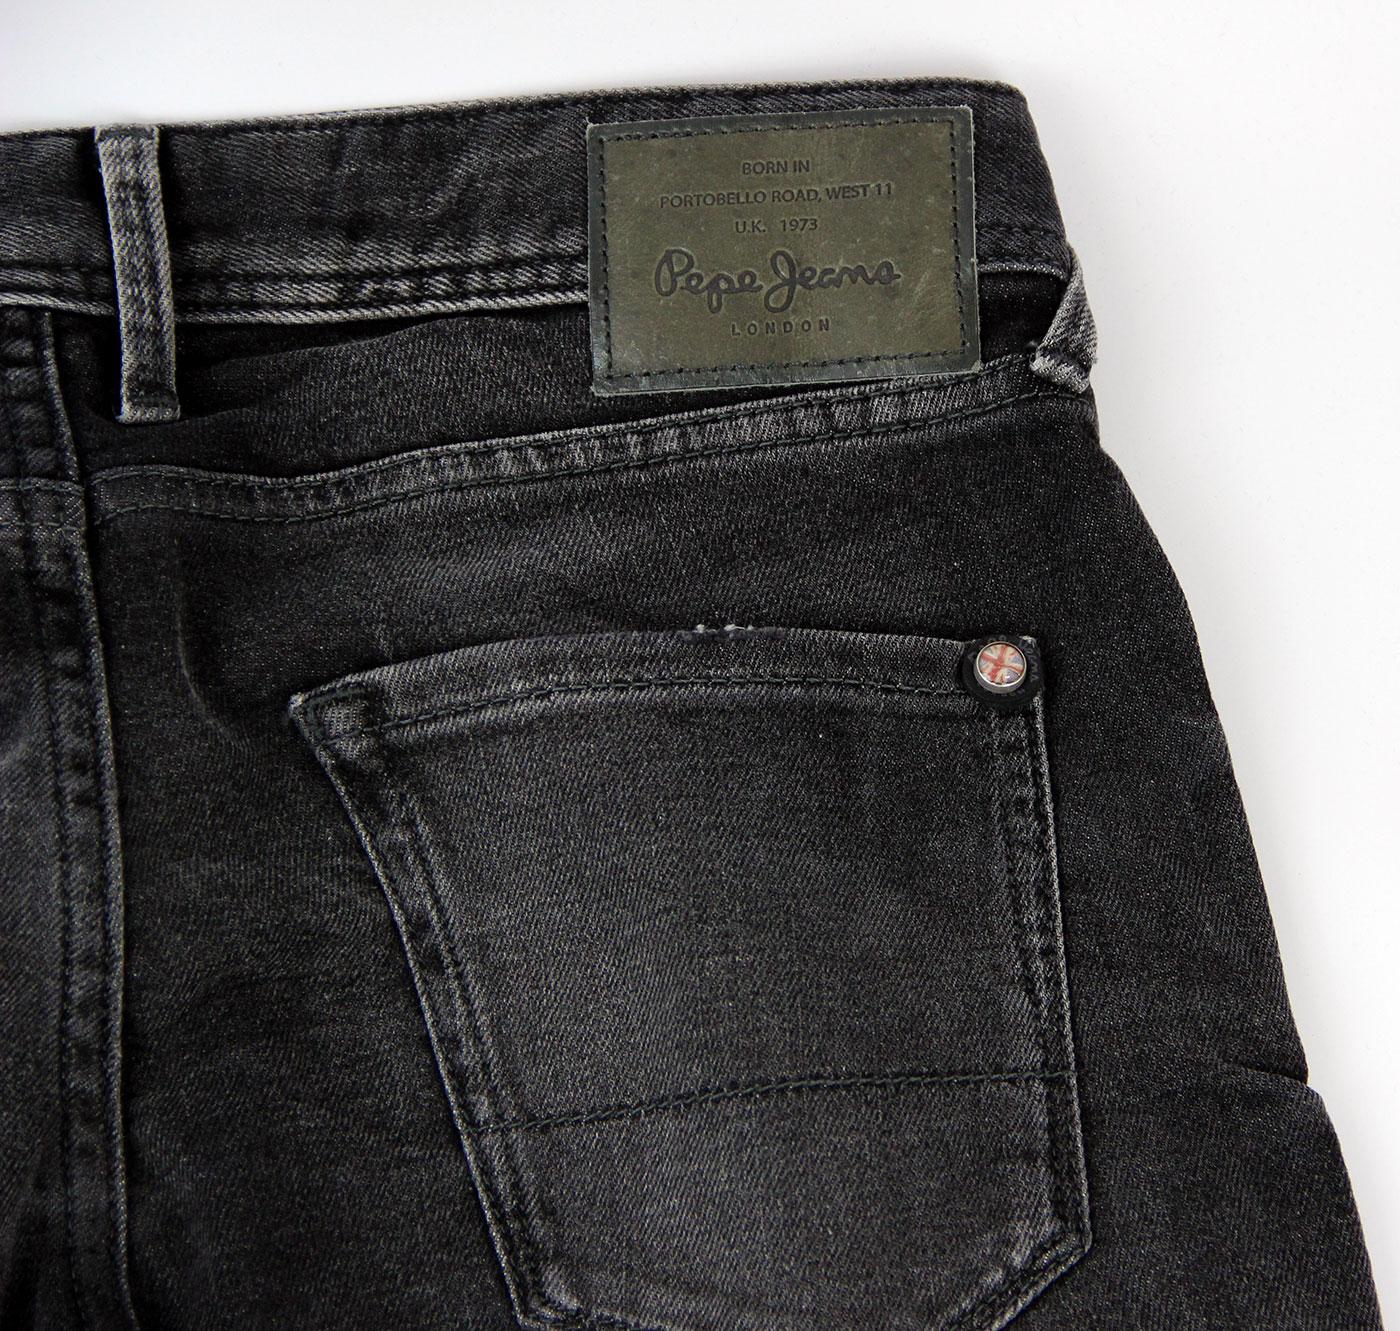 PEPE JEANS Finsbury Retro Indie Mod Drainpipe Jeans in Black